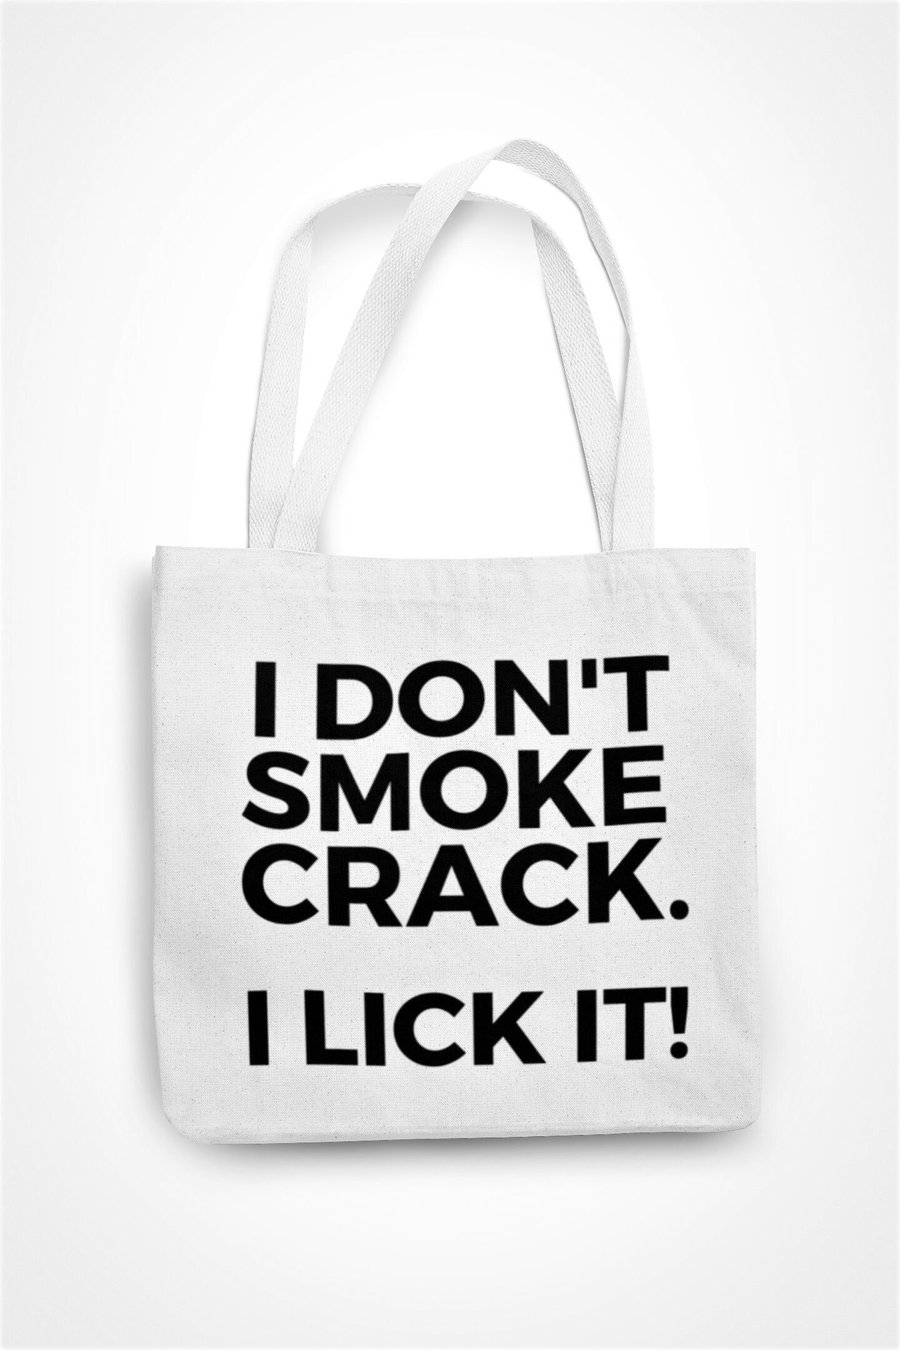 I Don't Smoke Crack I Lick It Tote Bag Rude Funny Sarcastic Novelty Shopping Bag